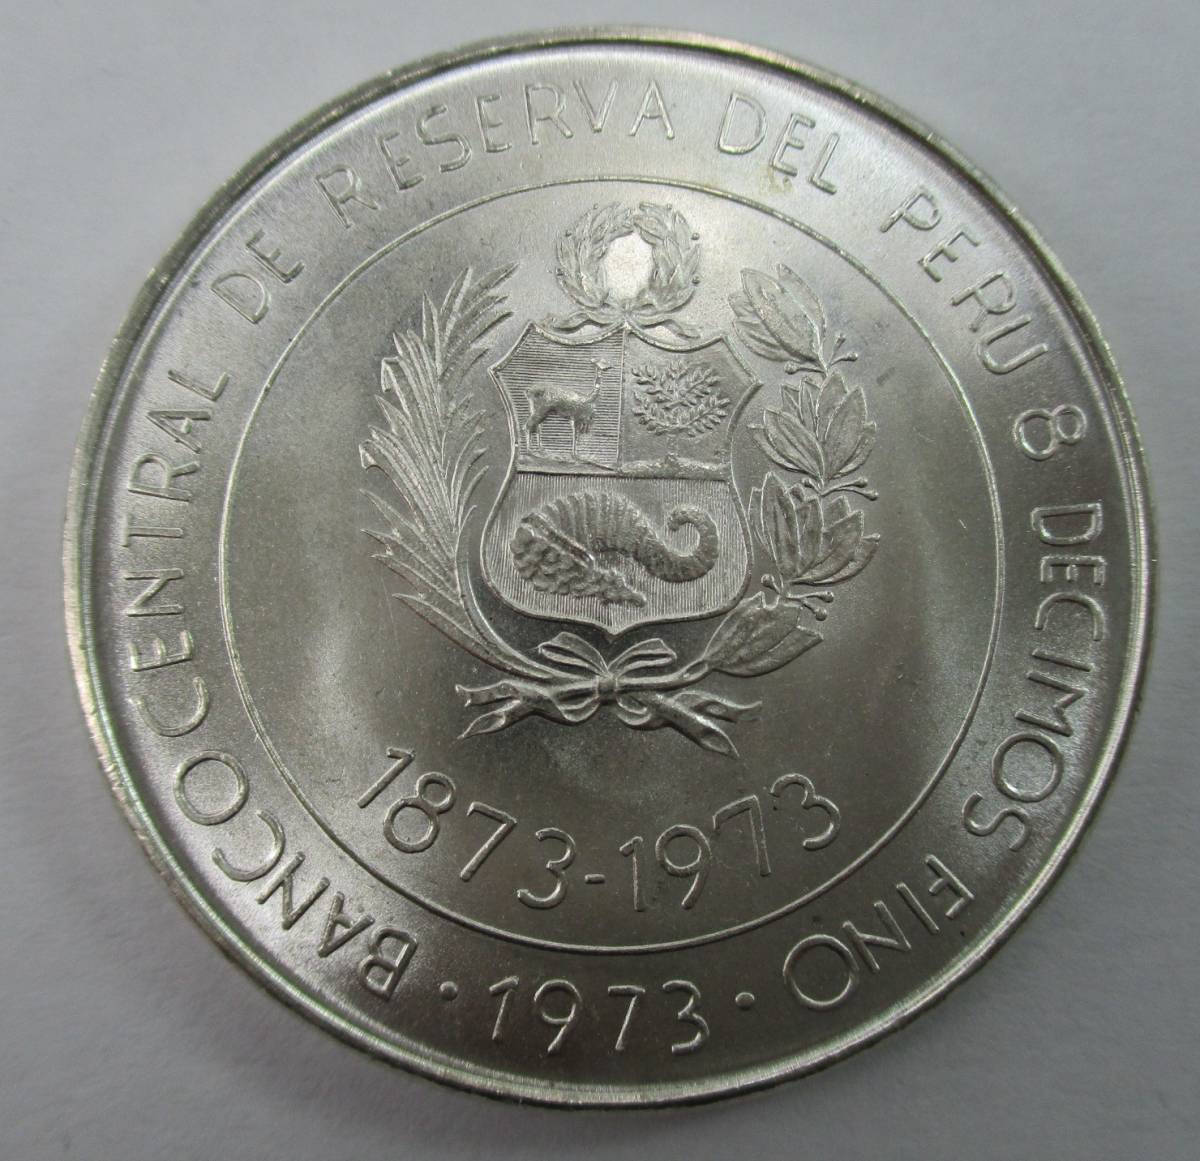 M-705　日本ペルー修好100周年記念　100soles de oro 銀貨　1873・1973　100ソル銀貨　美品　_画像1